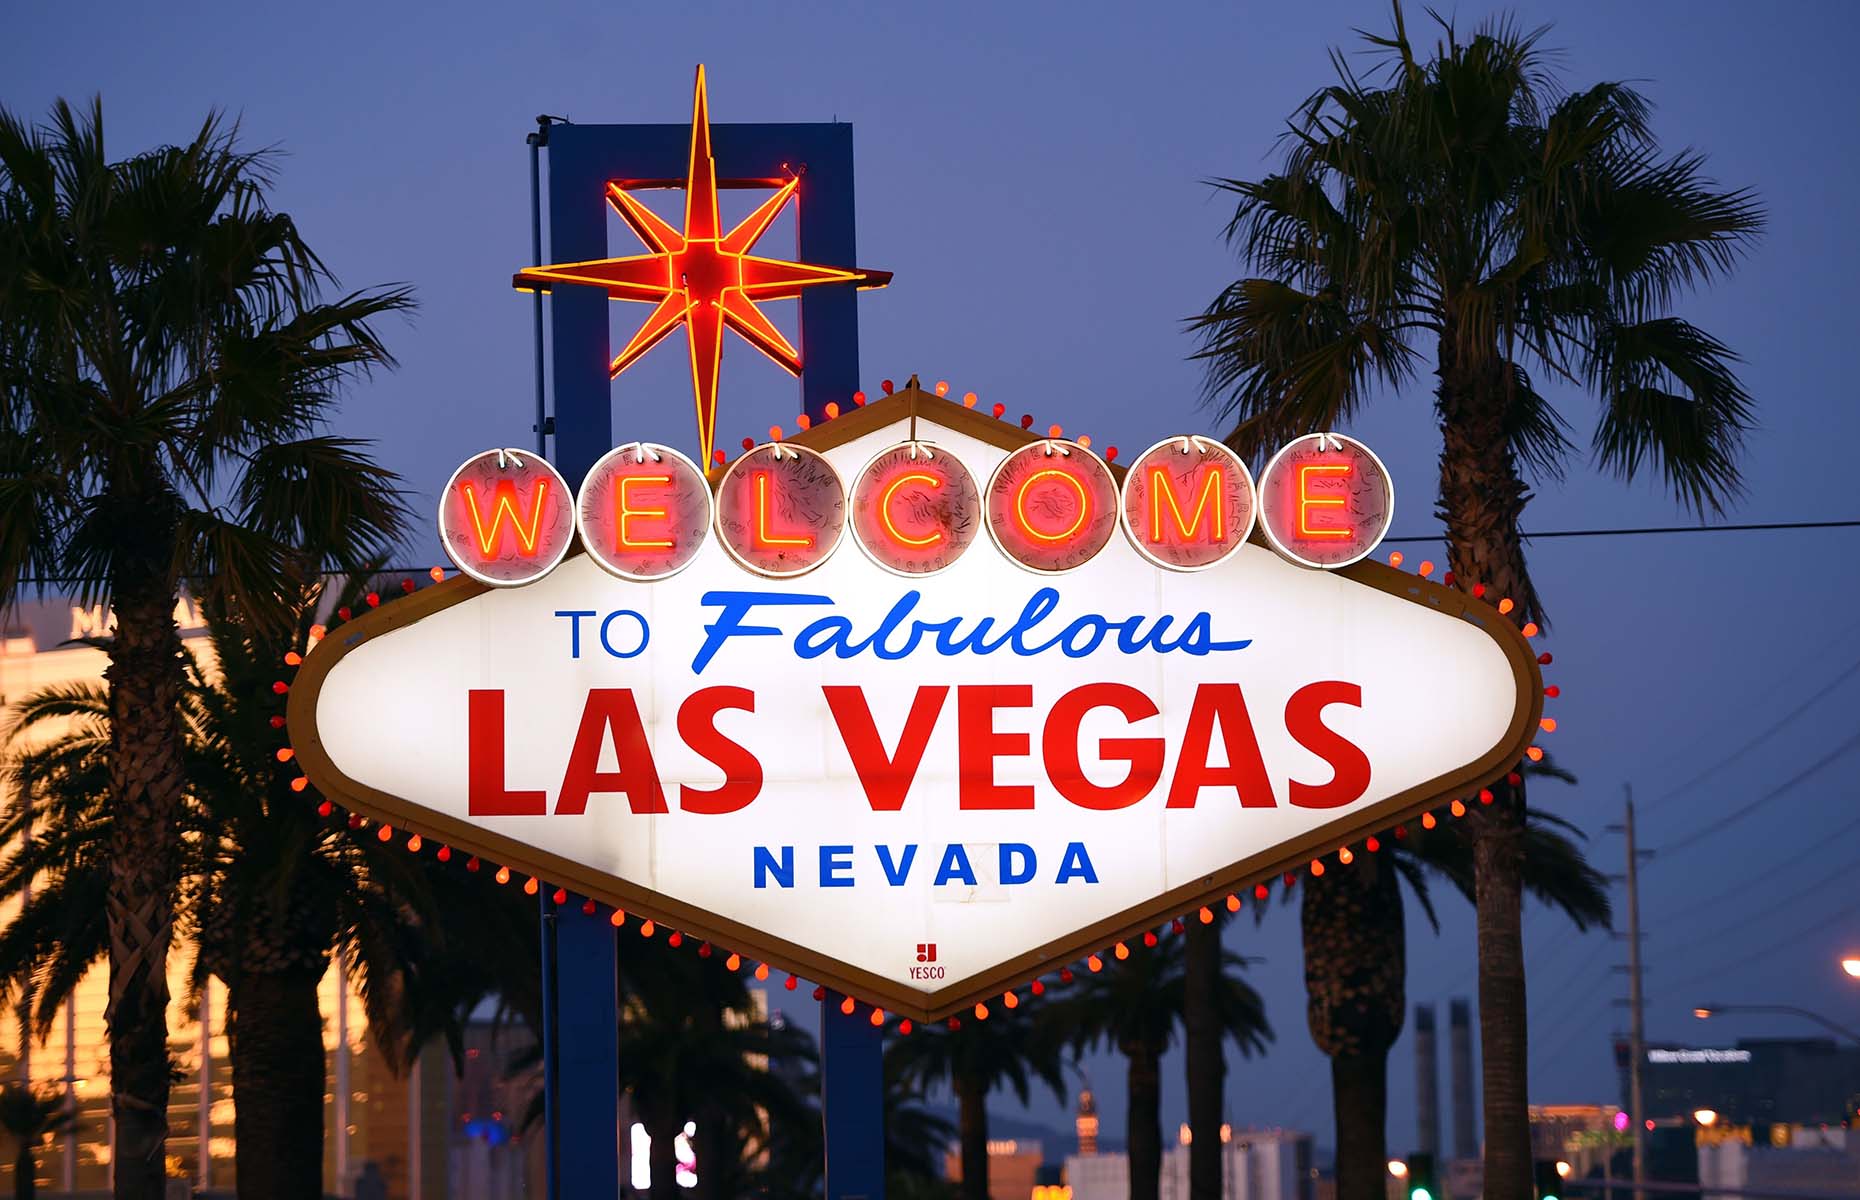 Welcome to Fabulous Las Vegas sign (Image: Sam Morris/Las Vegas News Bureaeu)